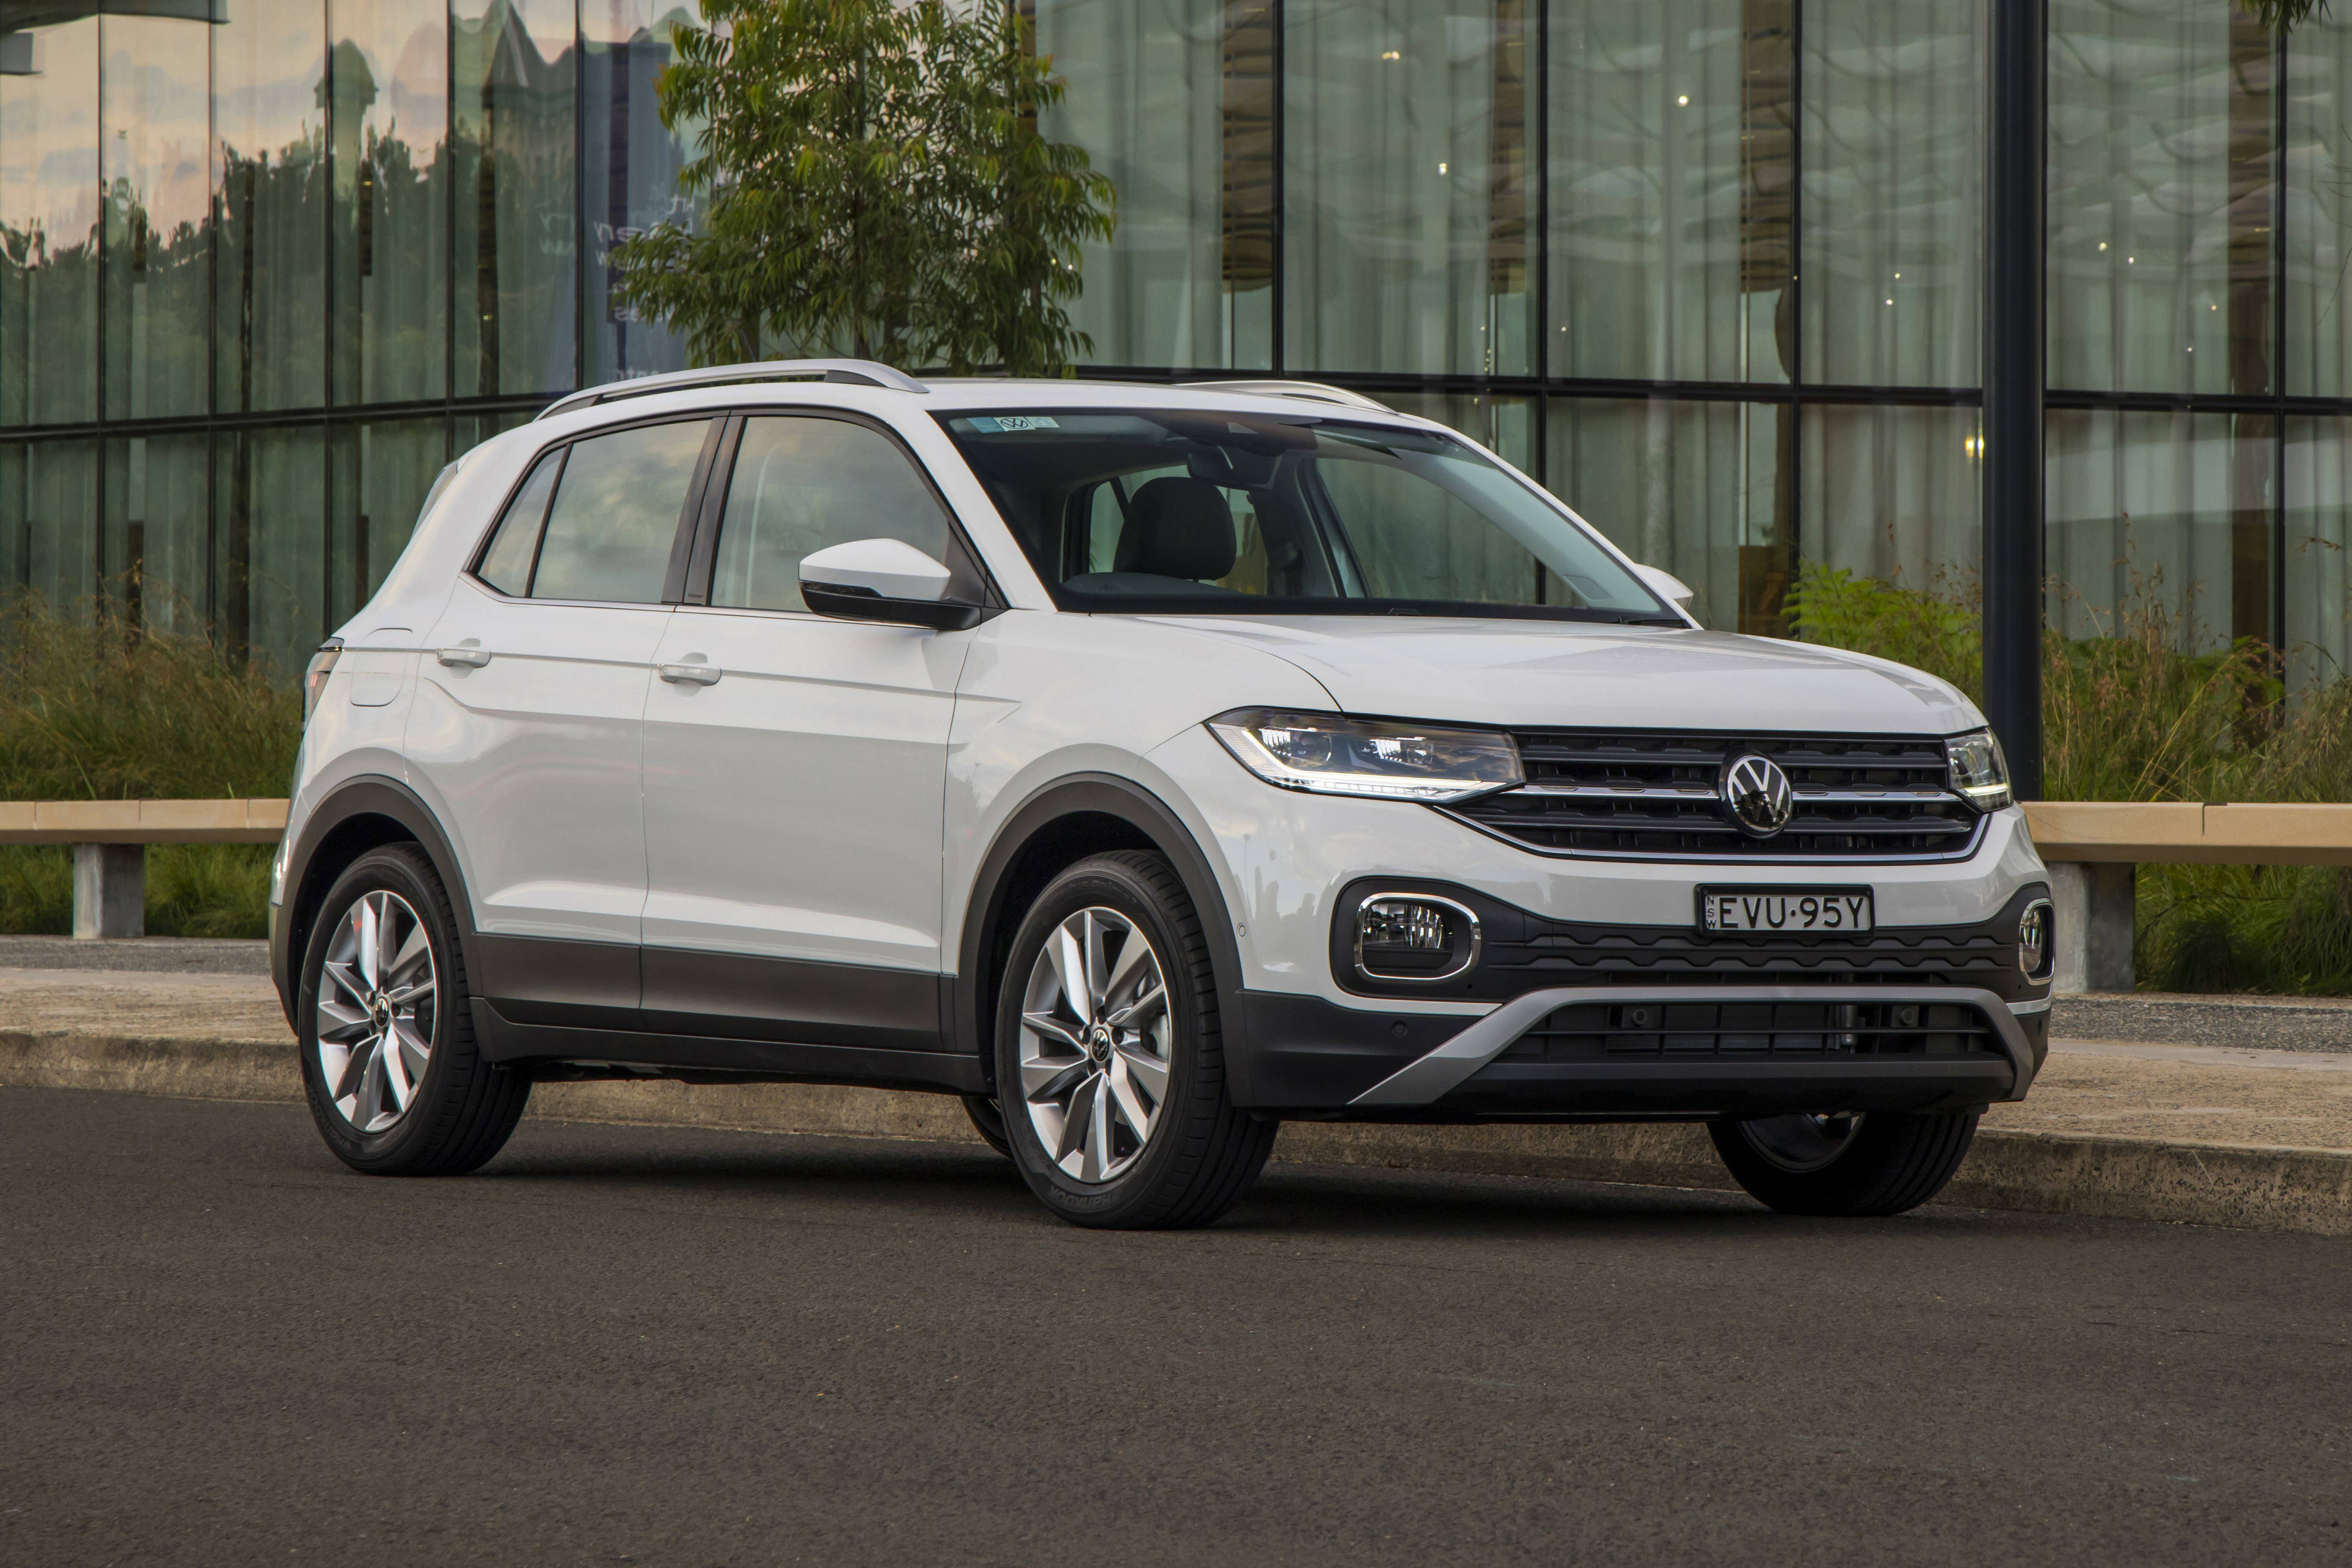 Volkswagen cuts T-Cross price ahead of updated model, Bunbury Mail